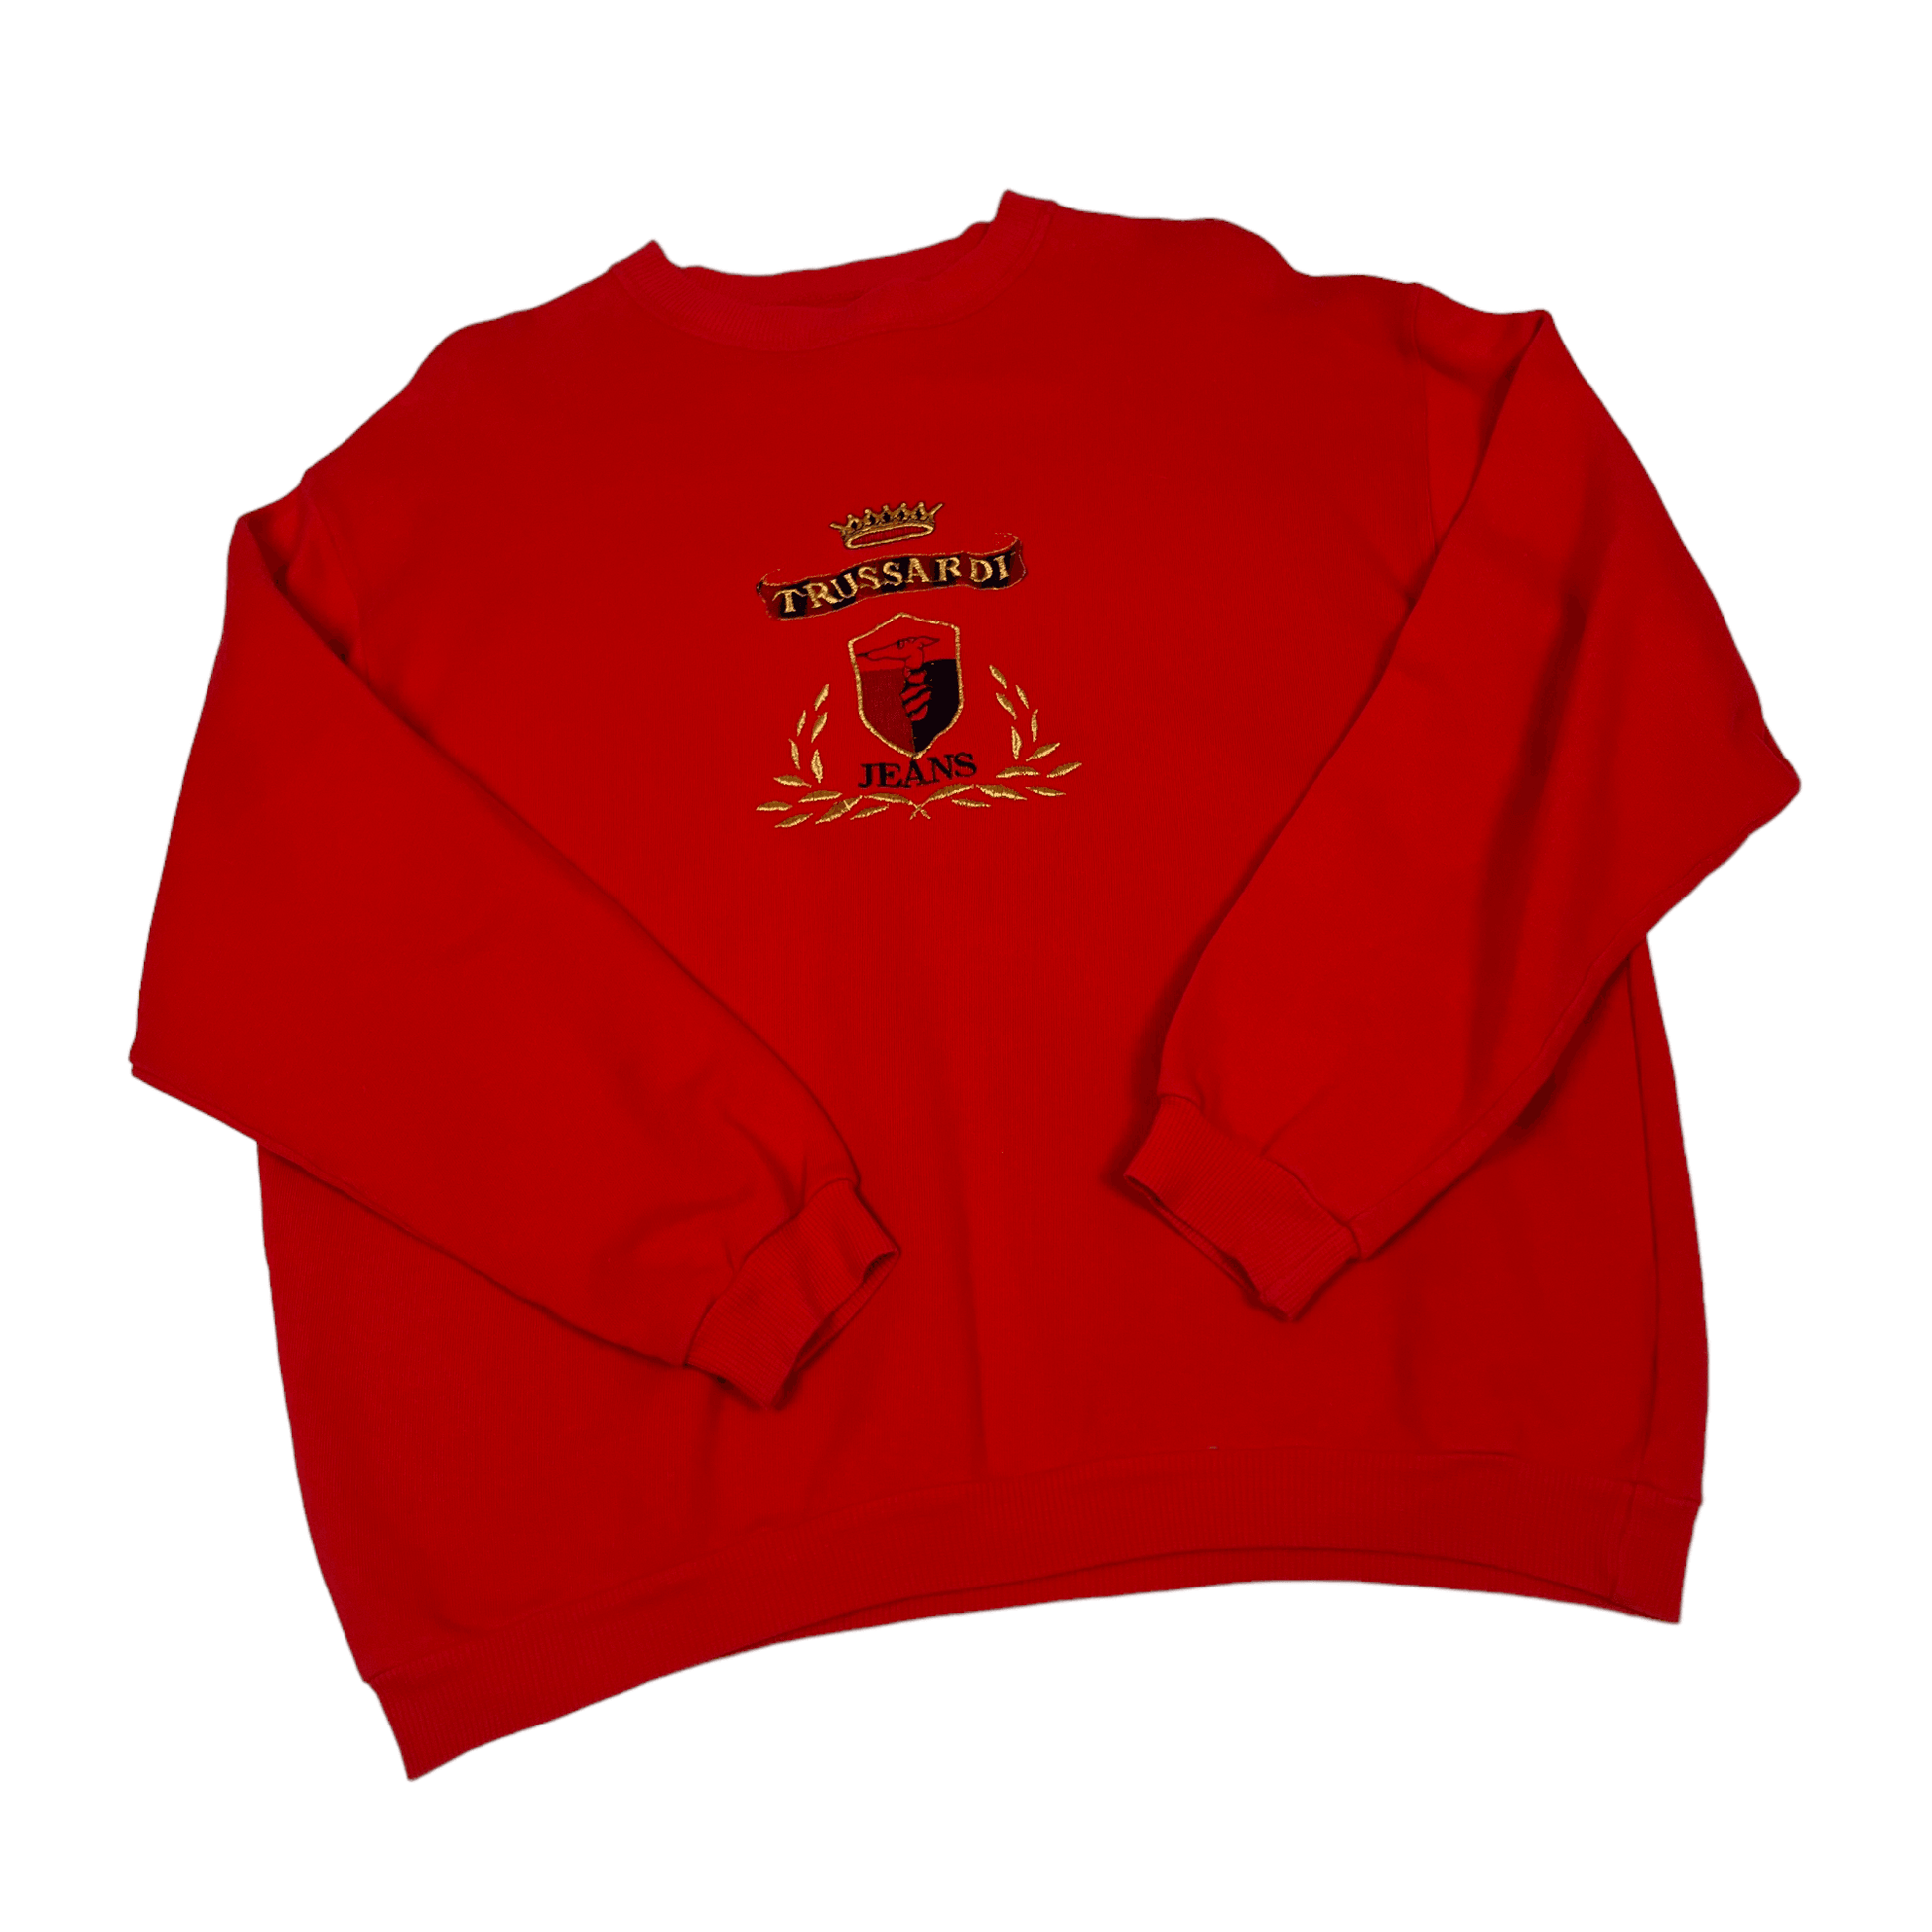 Vintage 90s Red Trussardi Jeans Sweatshirt - Large - The Streetwear Studio